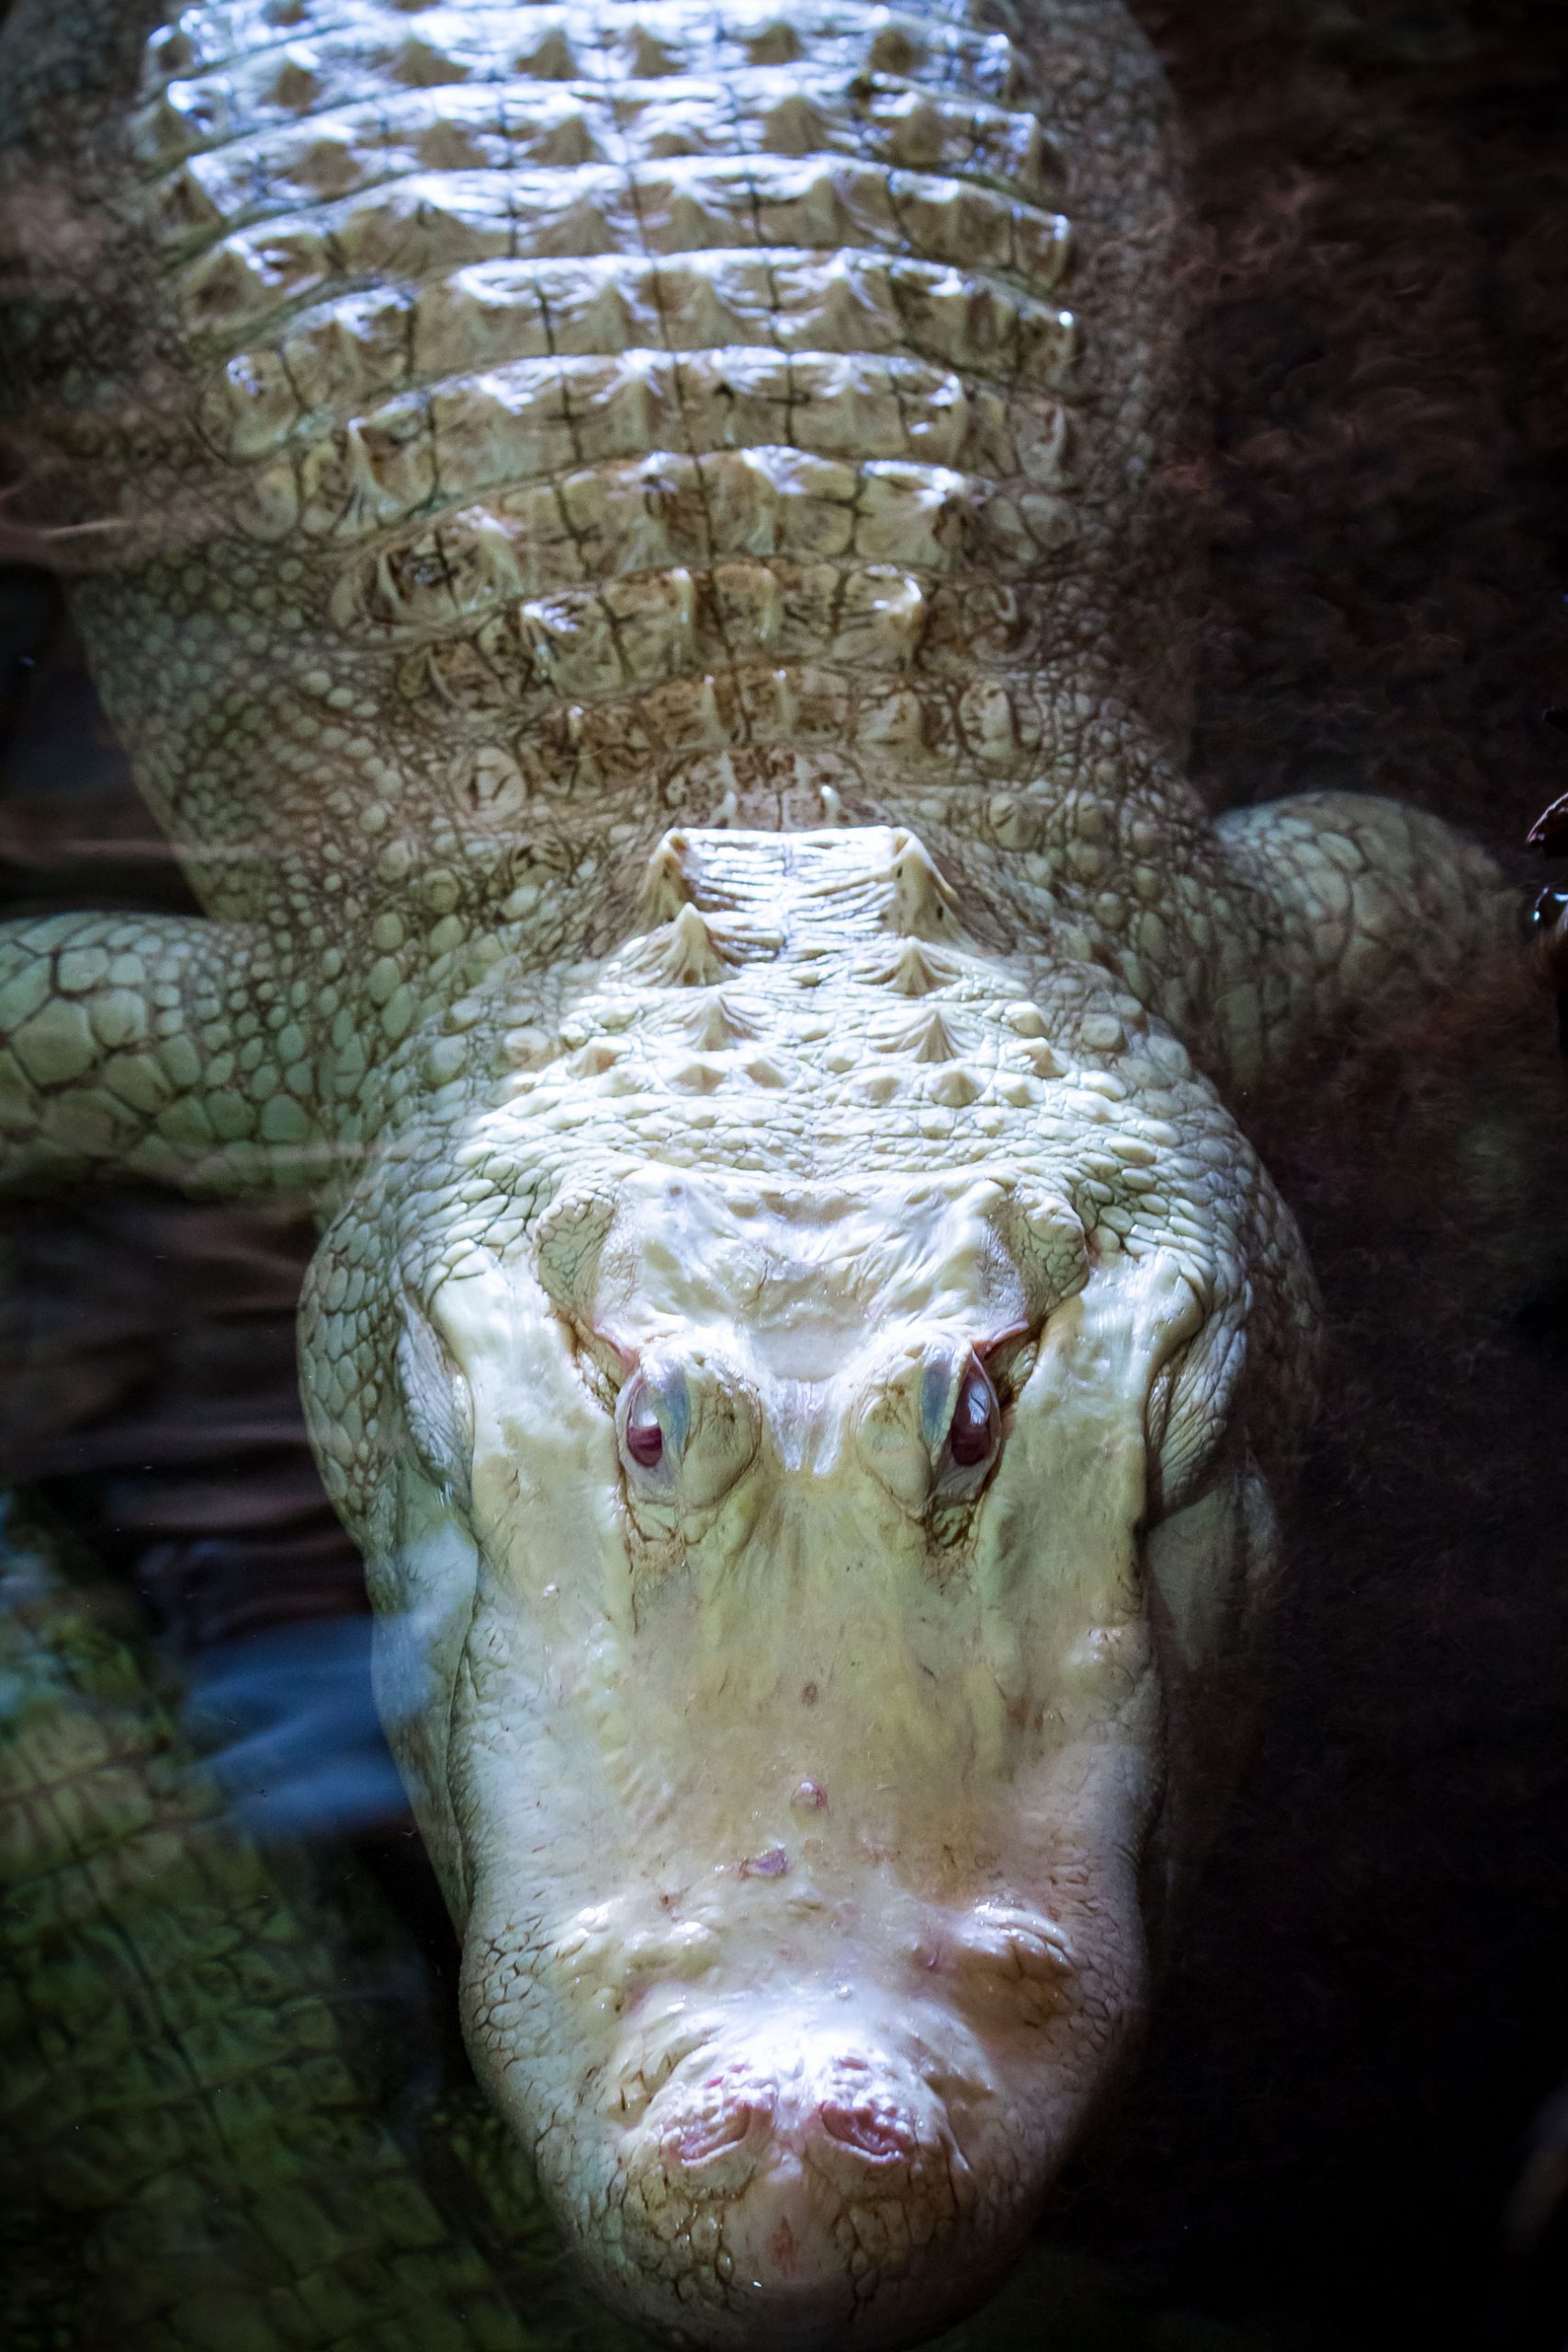 Albino Crocodile 